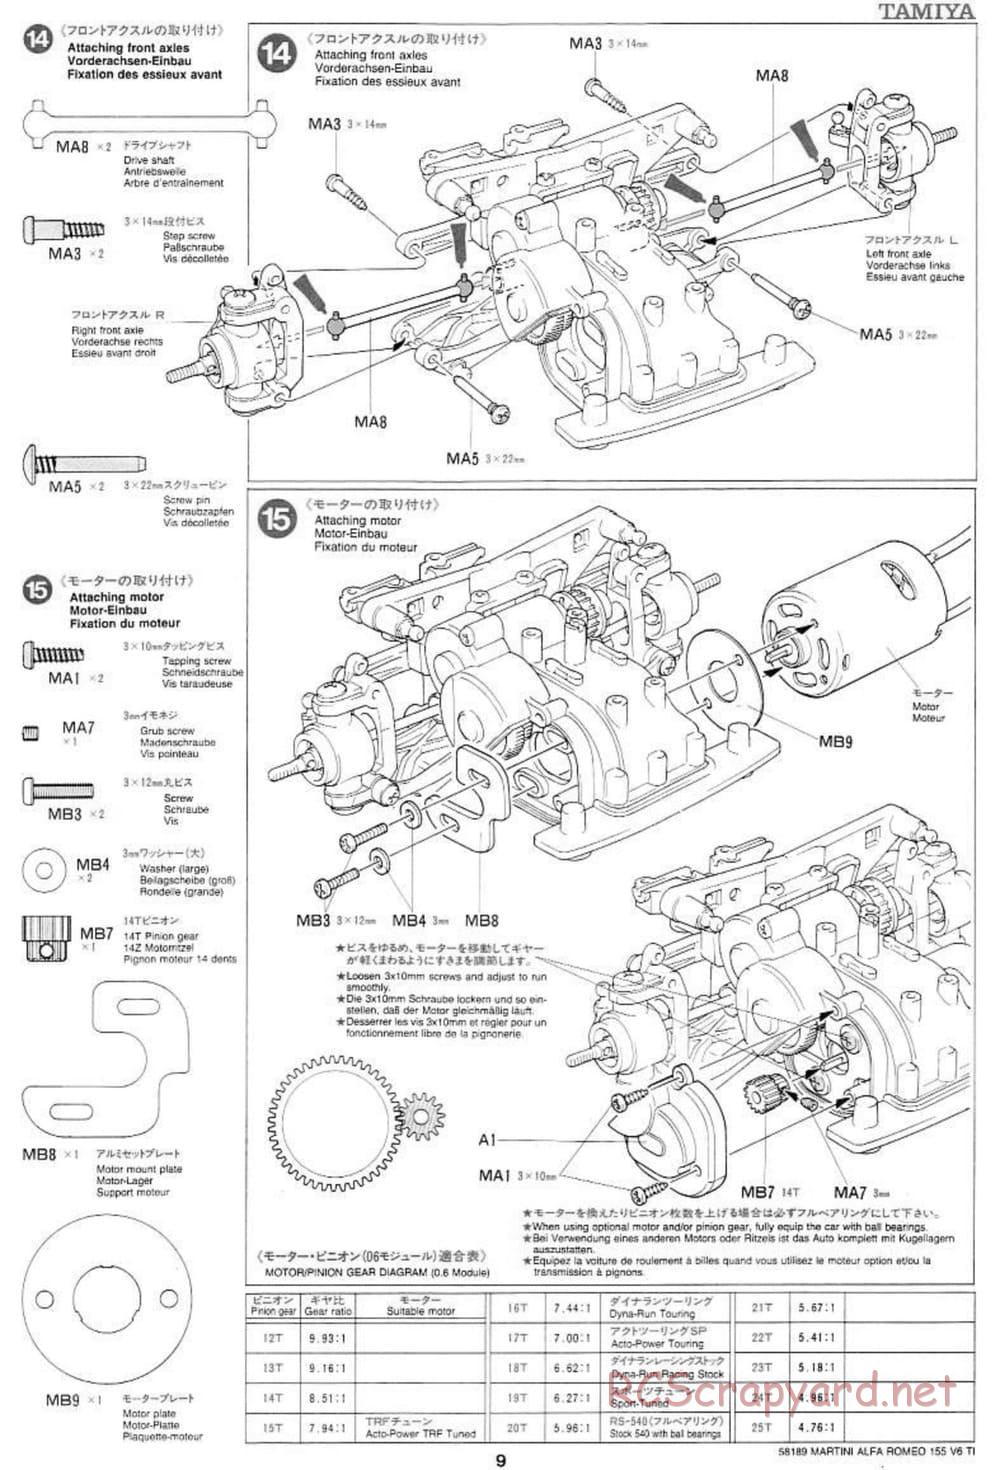 Tamiya - Martini Alfa Romeo 155 V6 TI - TA-03F Chassis - Manual - Page 9